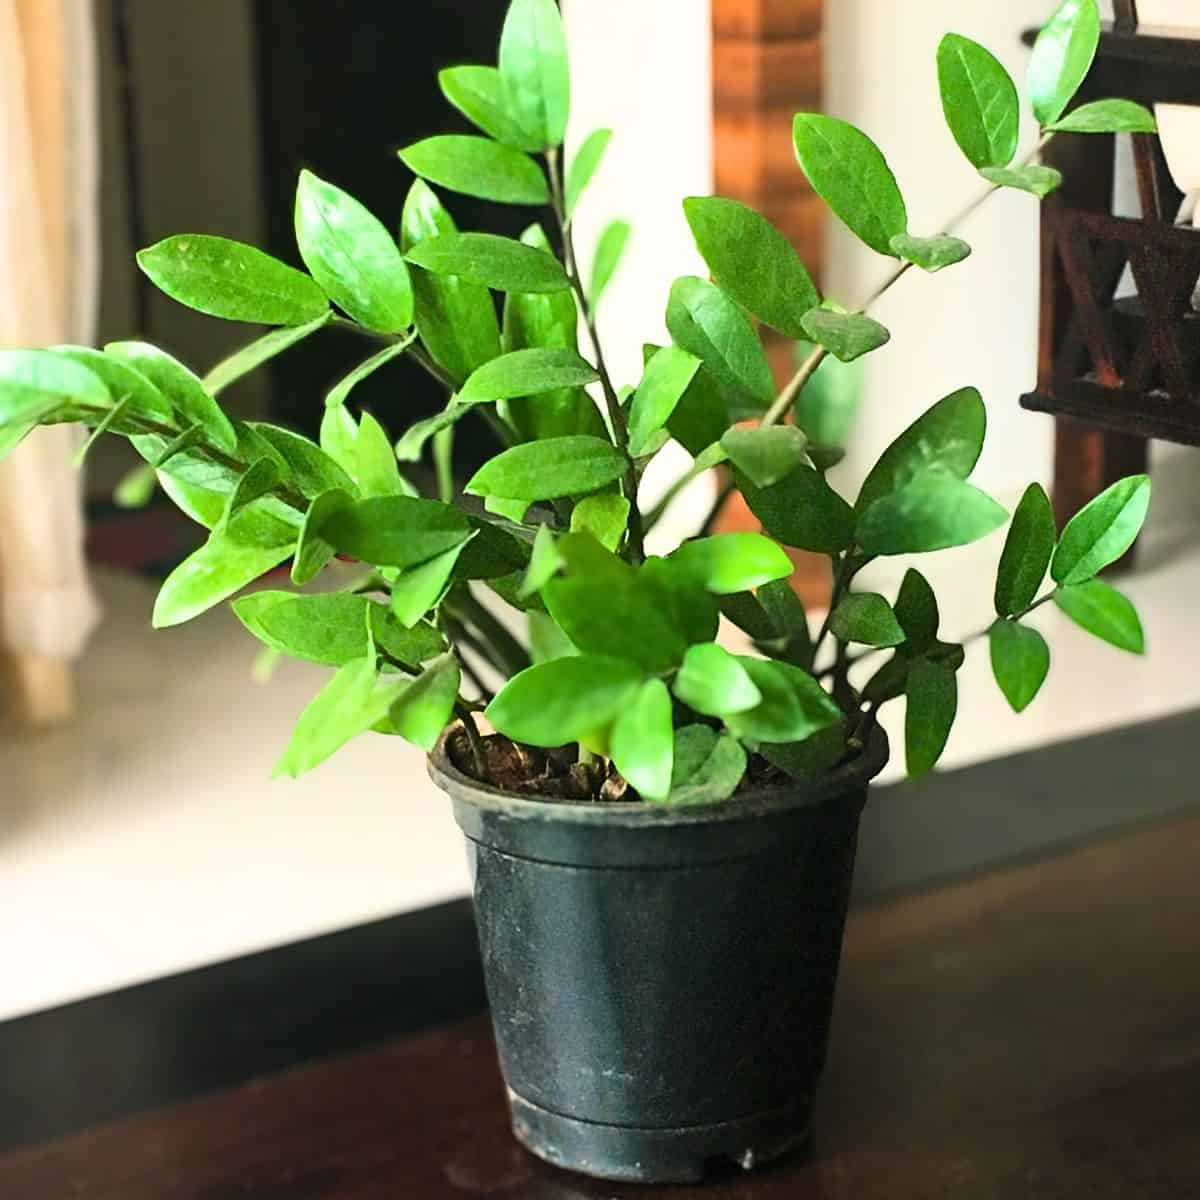 zz plant growing in a pot